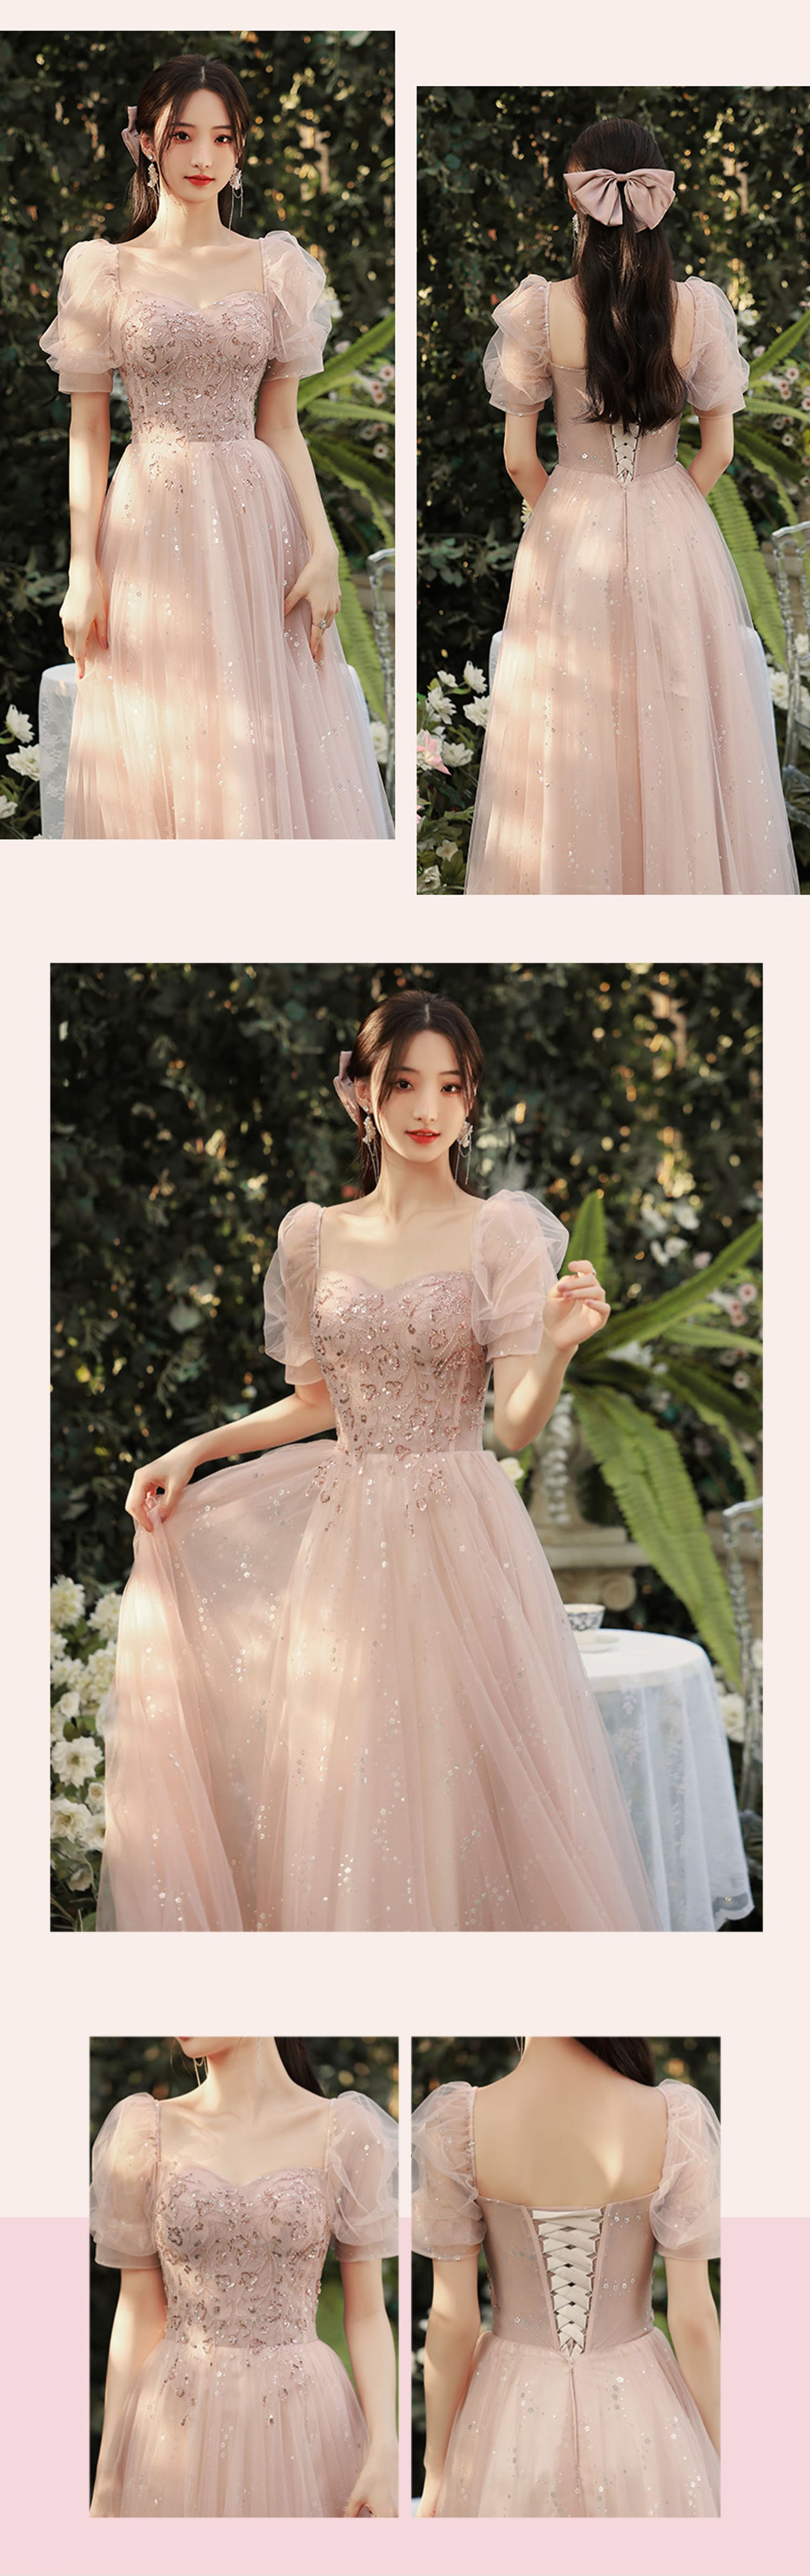 Aesthetic-Pink-Bridal-Wedding-Party-Bridesmaid-Long-Maxi-Dress20.jpg